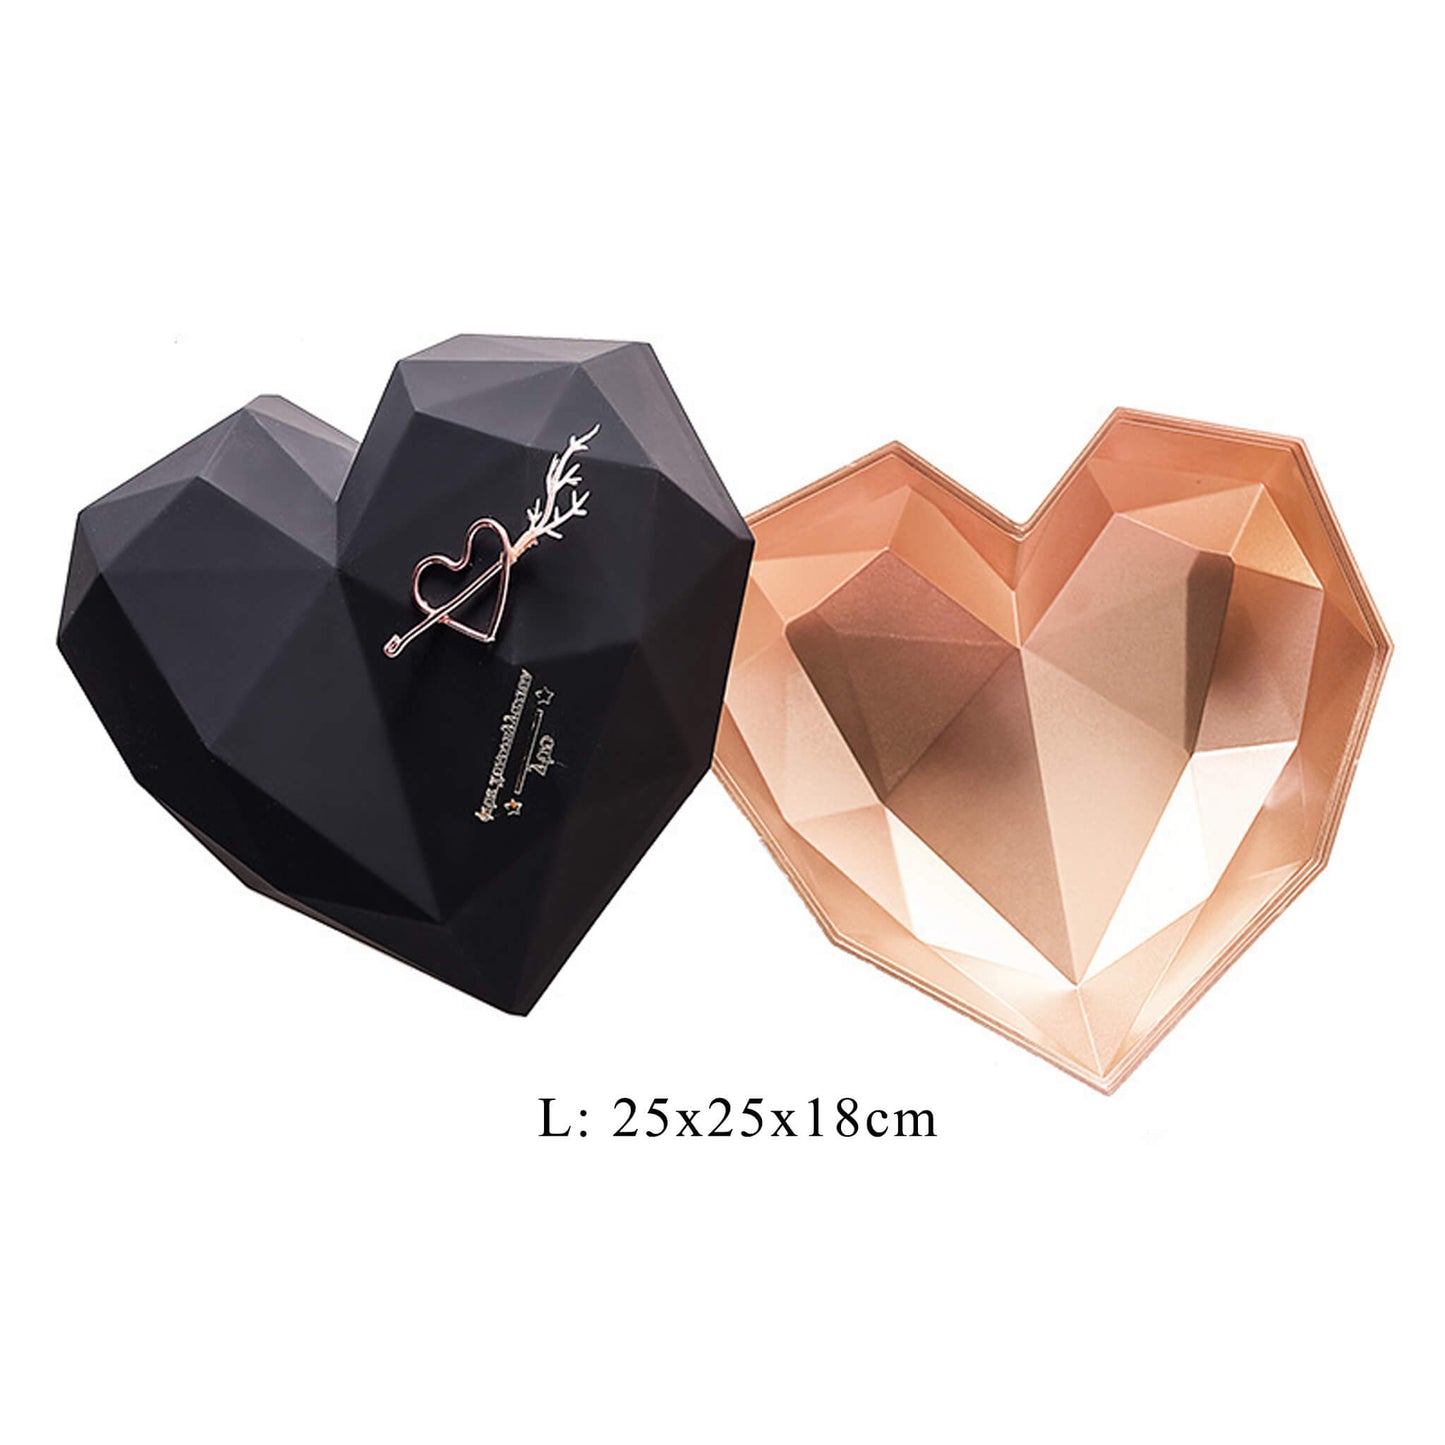 Diamond Shaped Heart Flower Gift Boxes For Arrangements